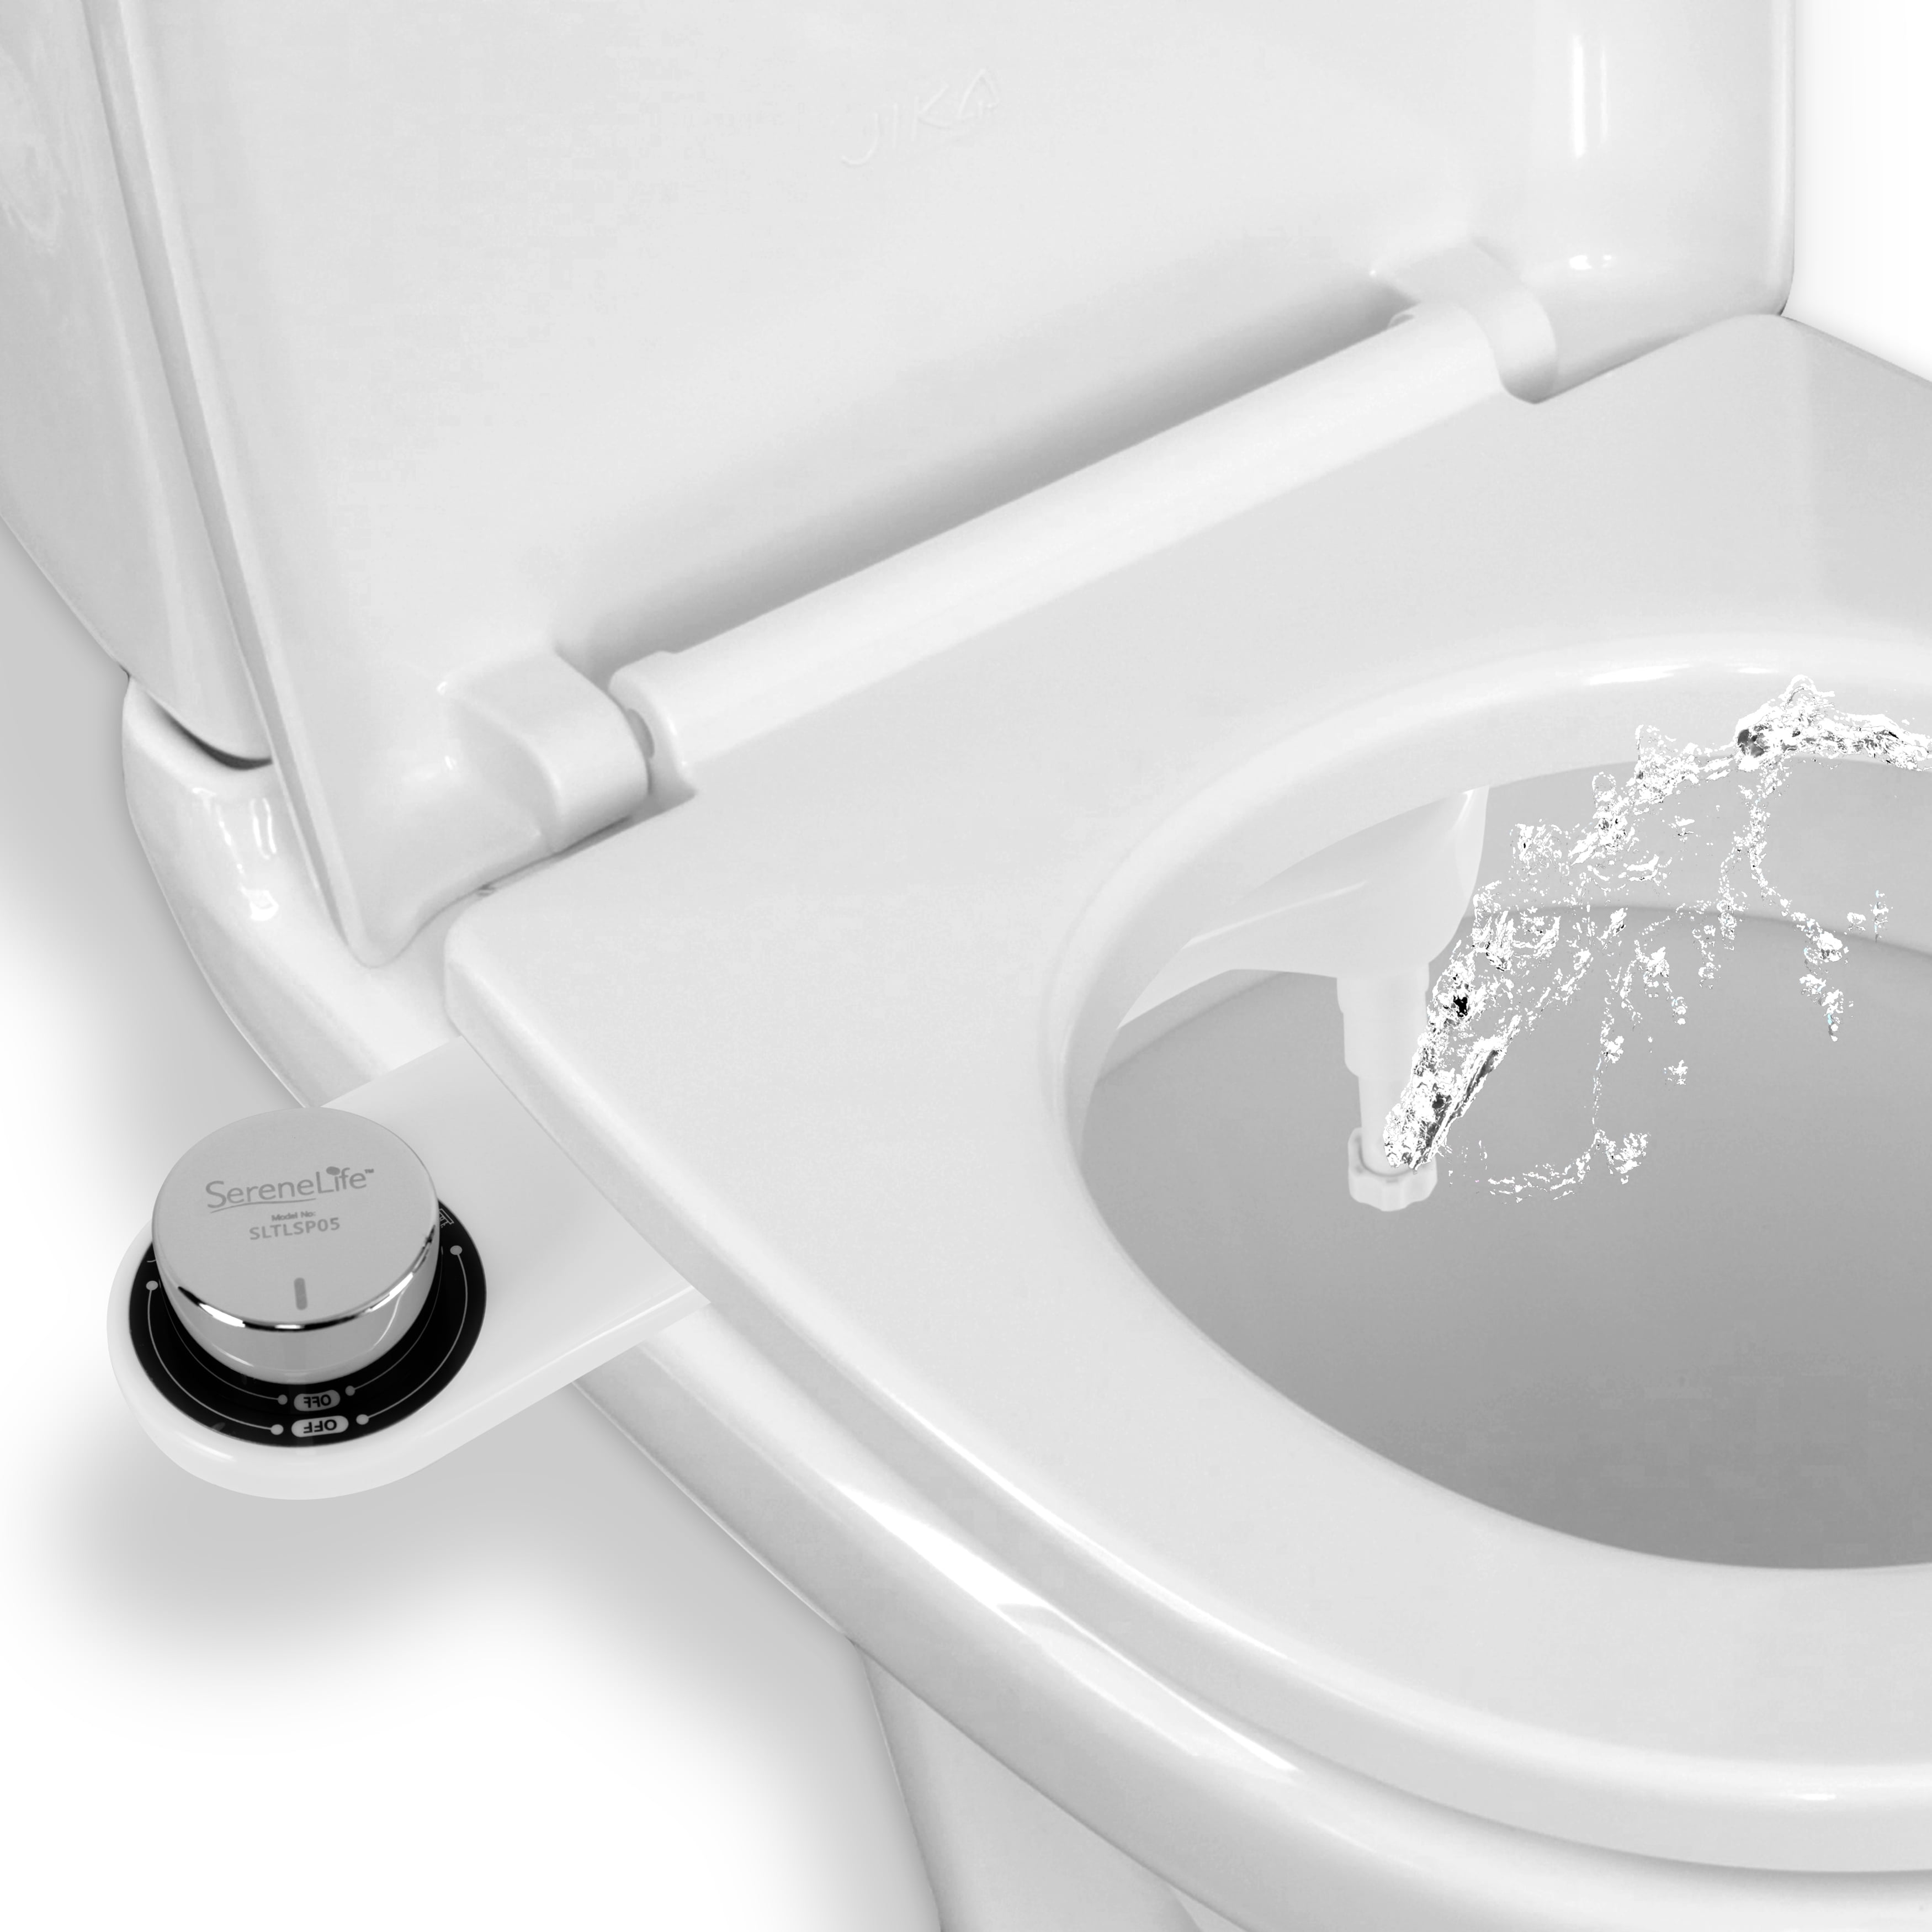 7/8 Bidet Fresh Water Spray Mechanical Non-Electric Bidet Toilet Seat US Stock 